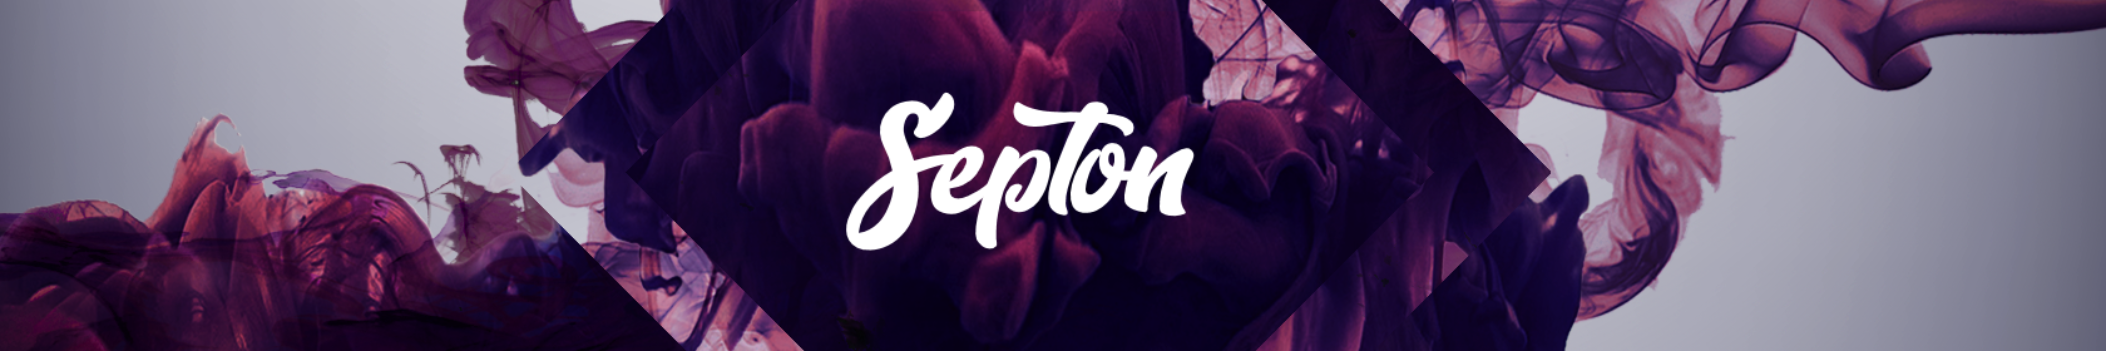 Septon